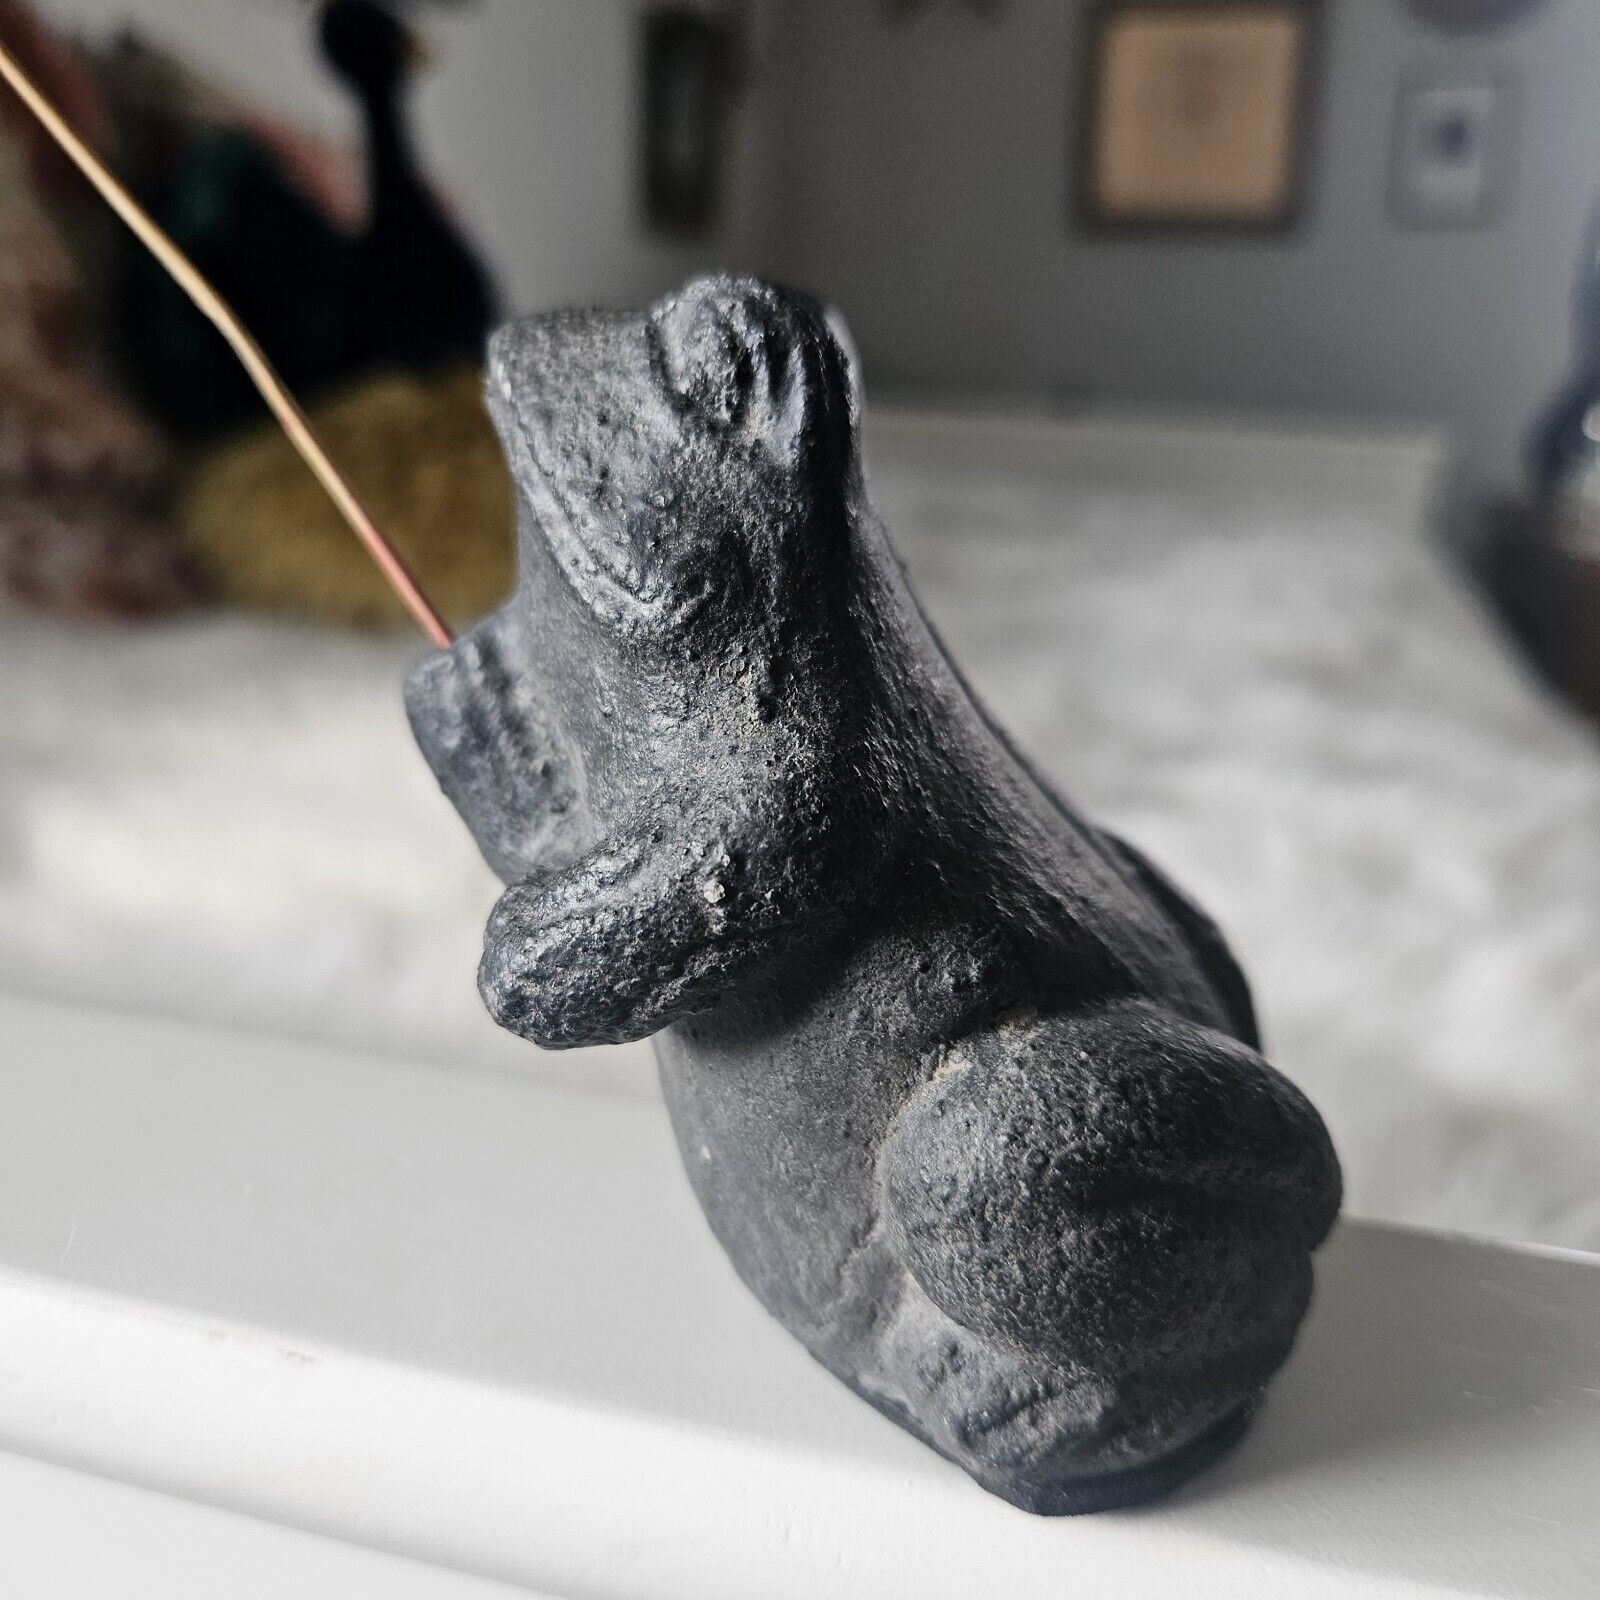 Namaste Frog Stick Incense Burner Holder Prayer Pose Felt Bottom Decorative Item